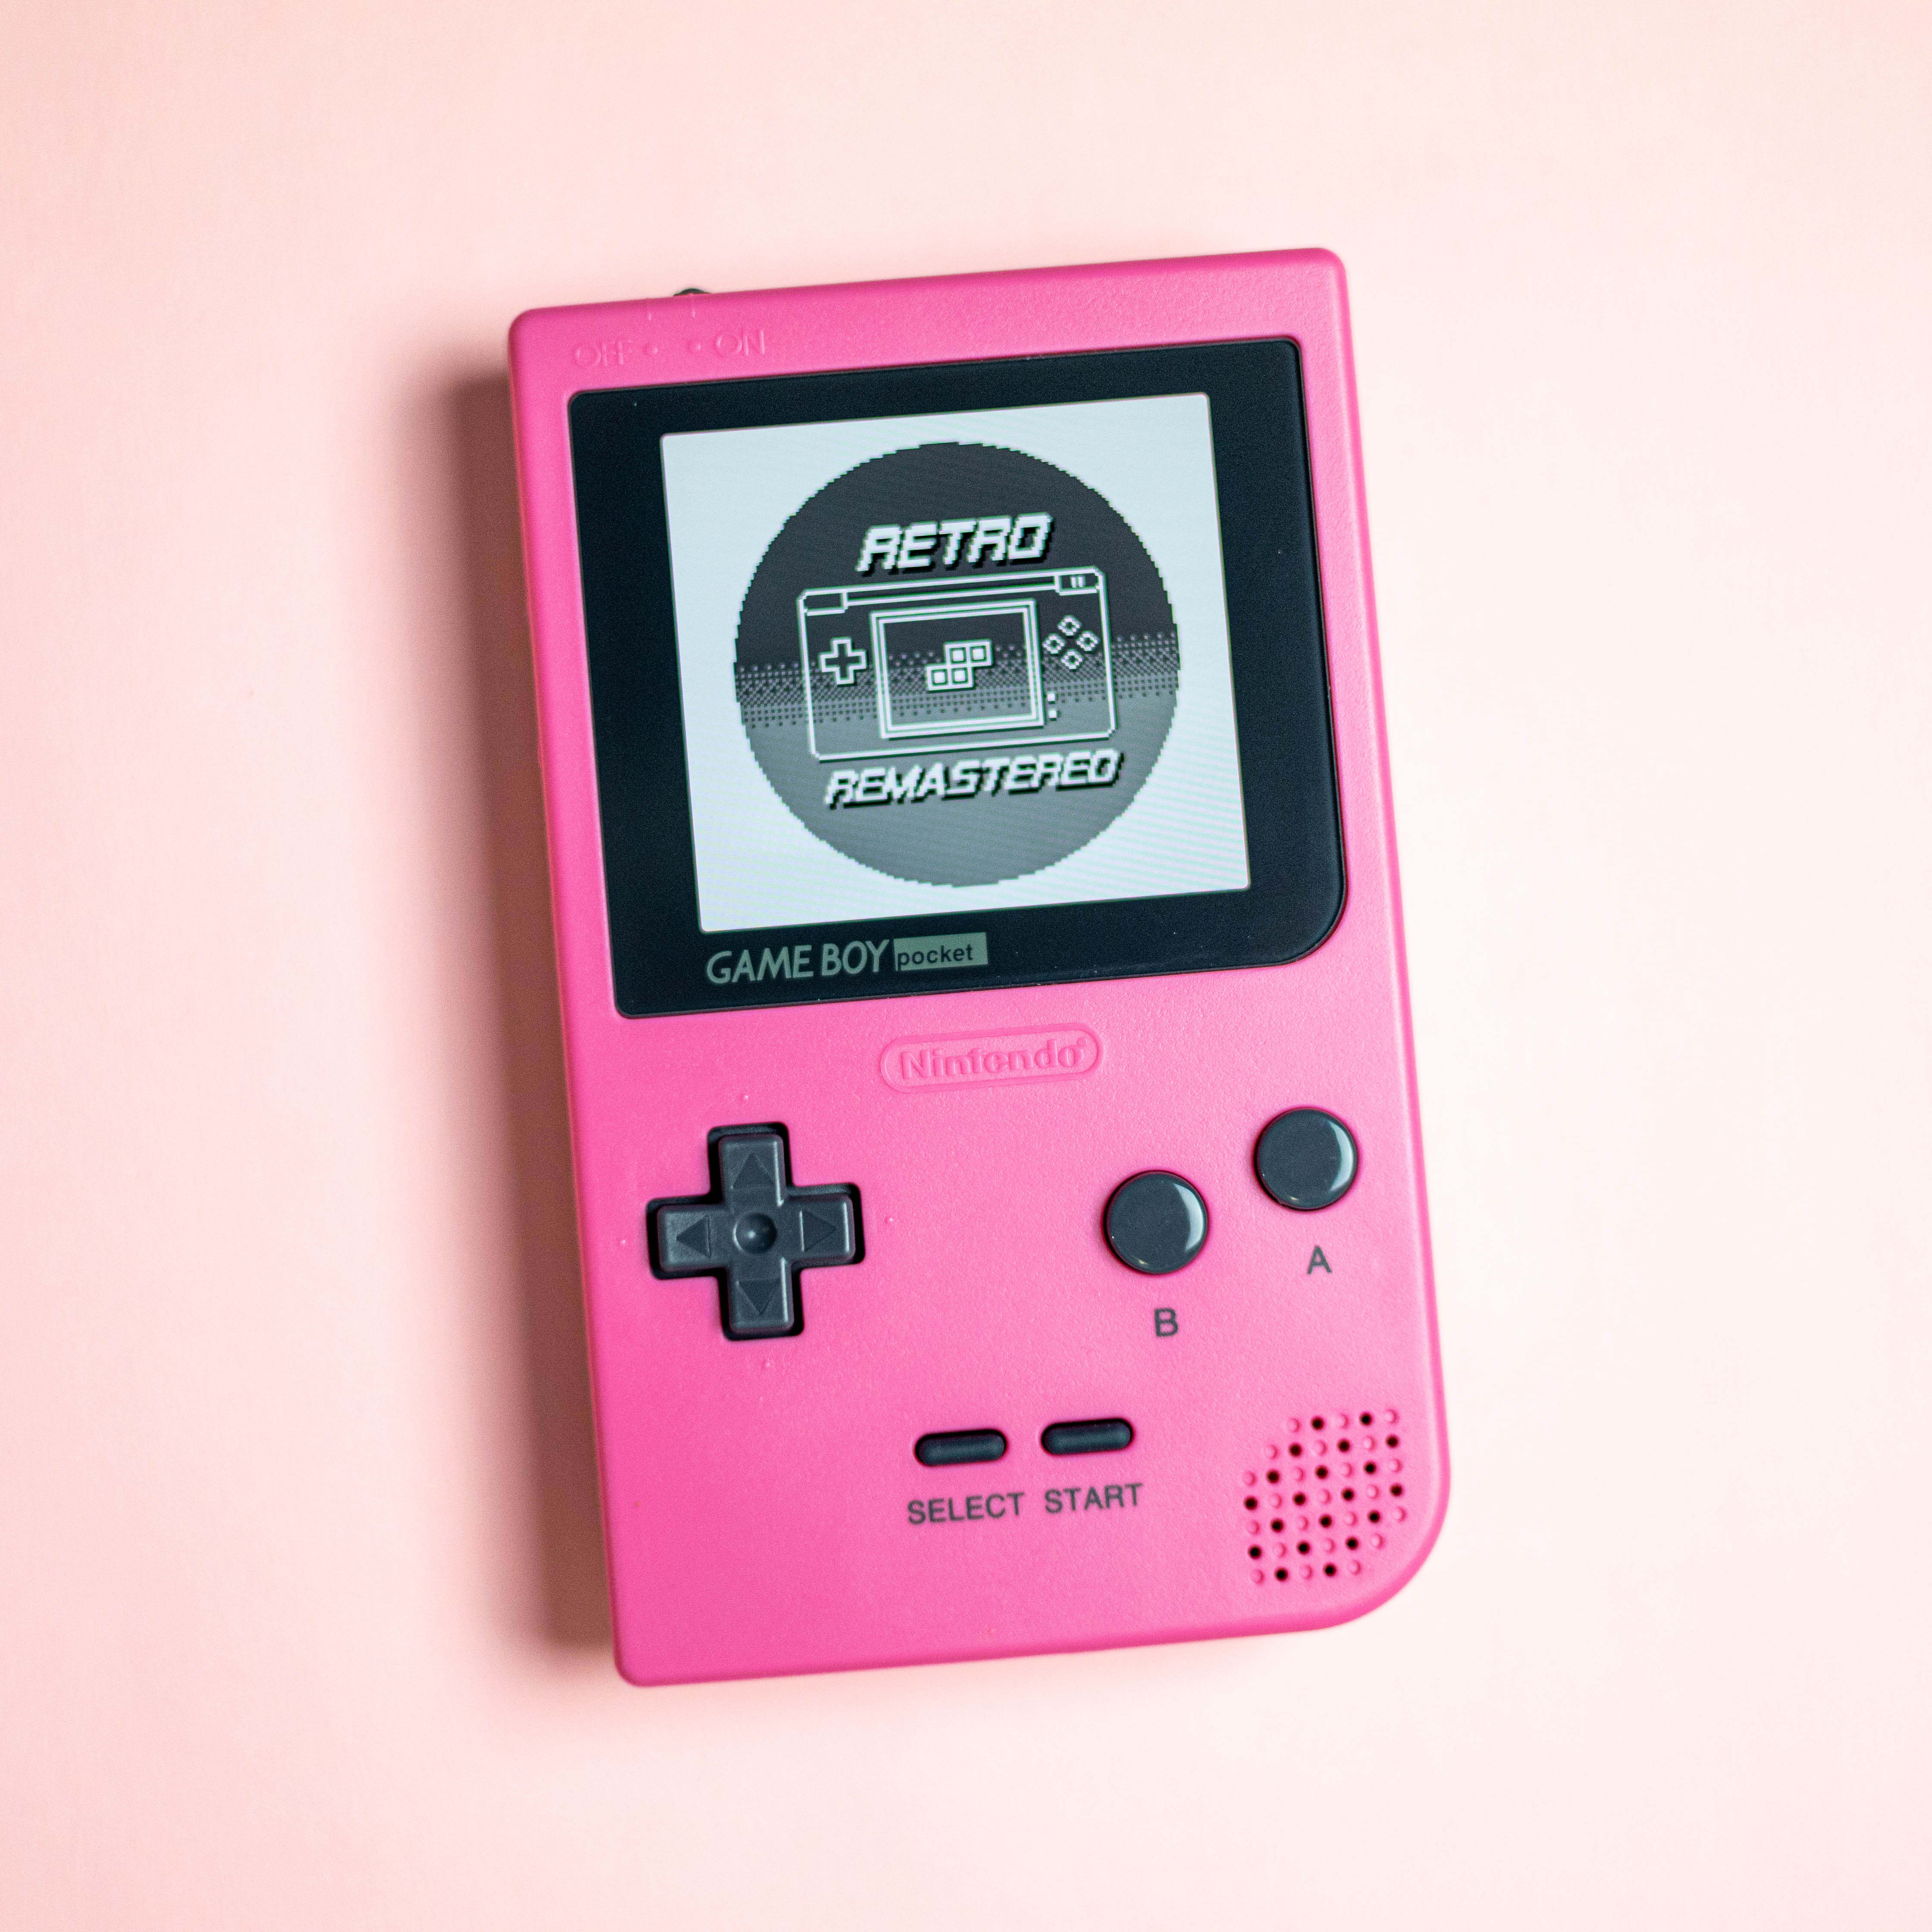 Modded Game Boy Pocket w/ IPS Display (Pink)